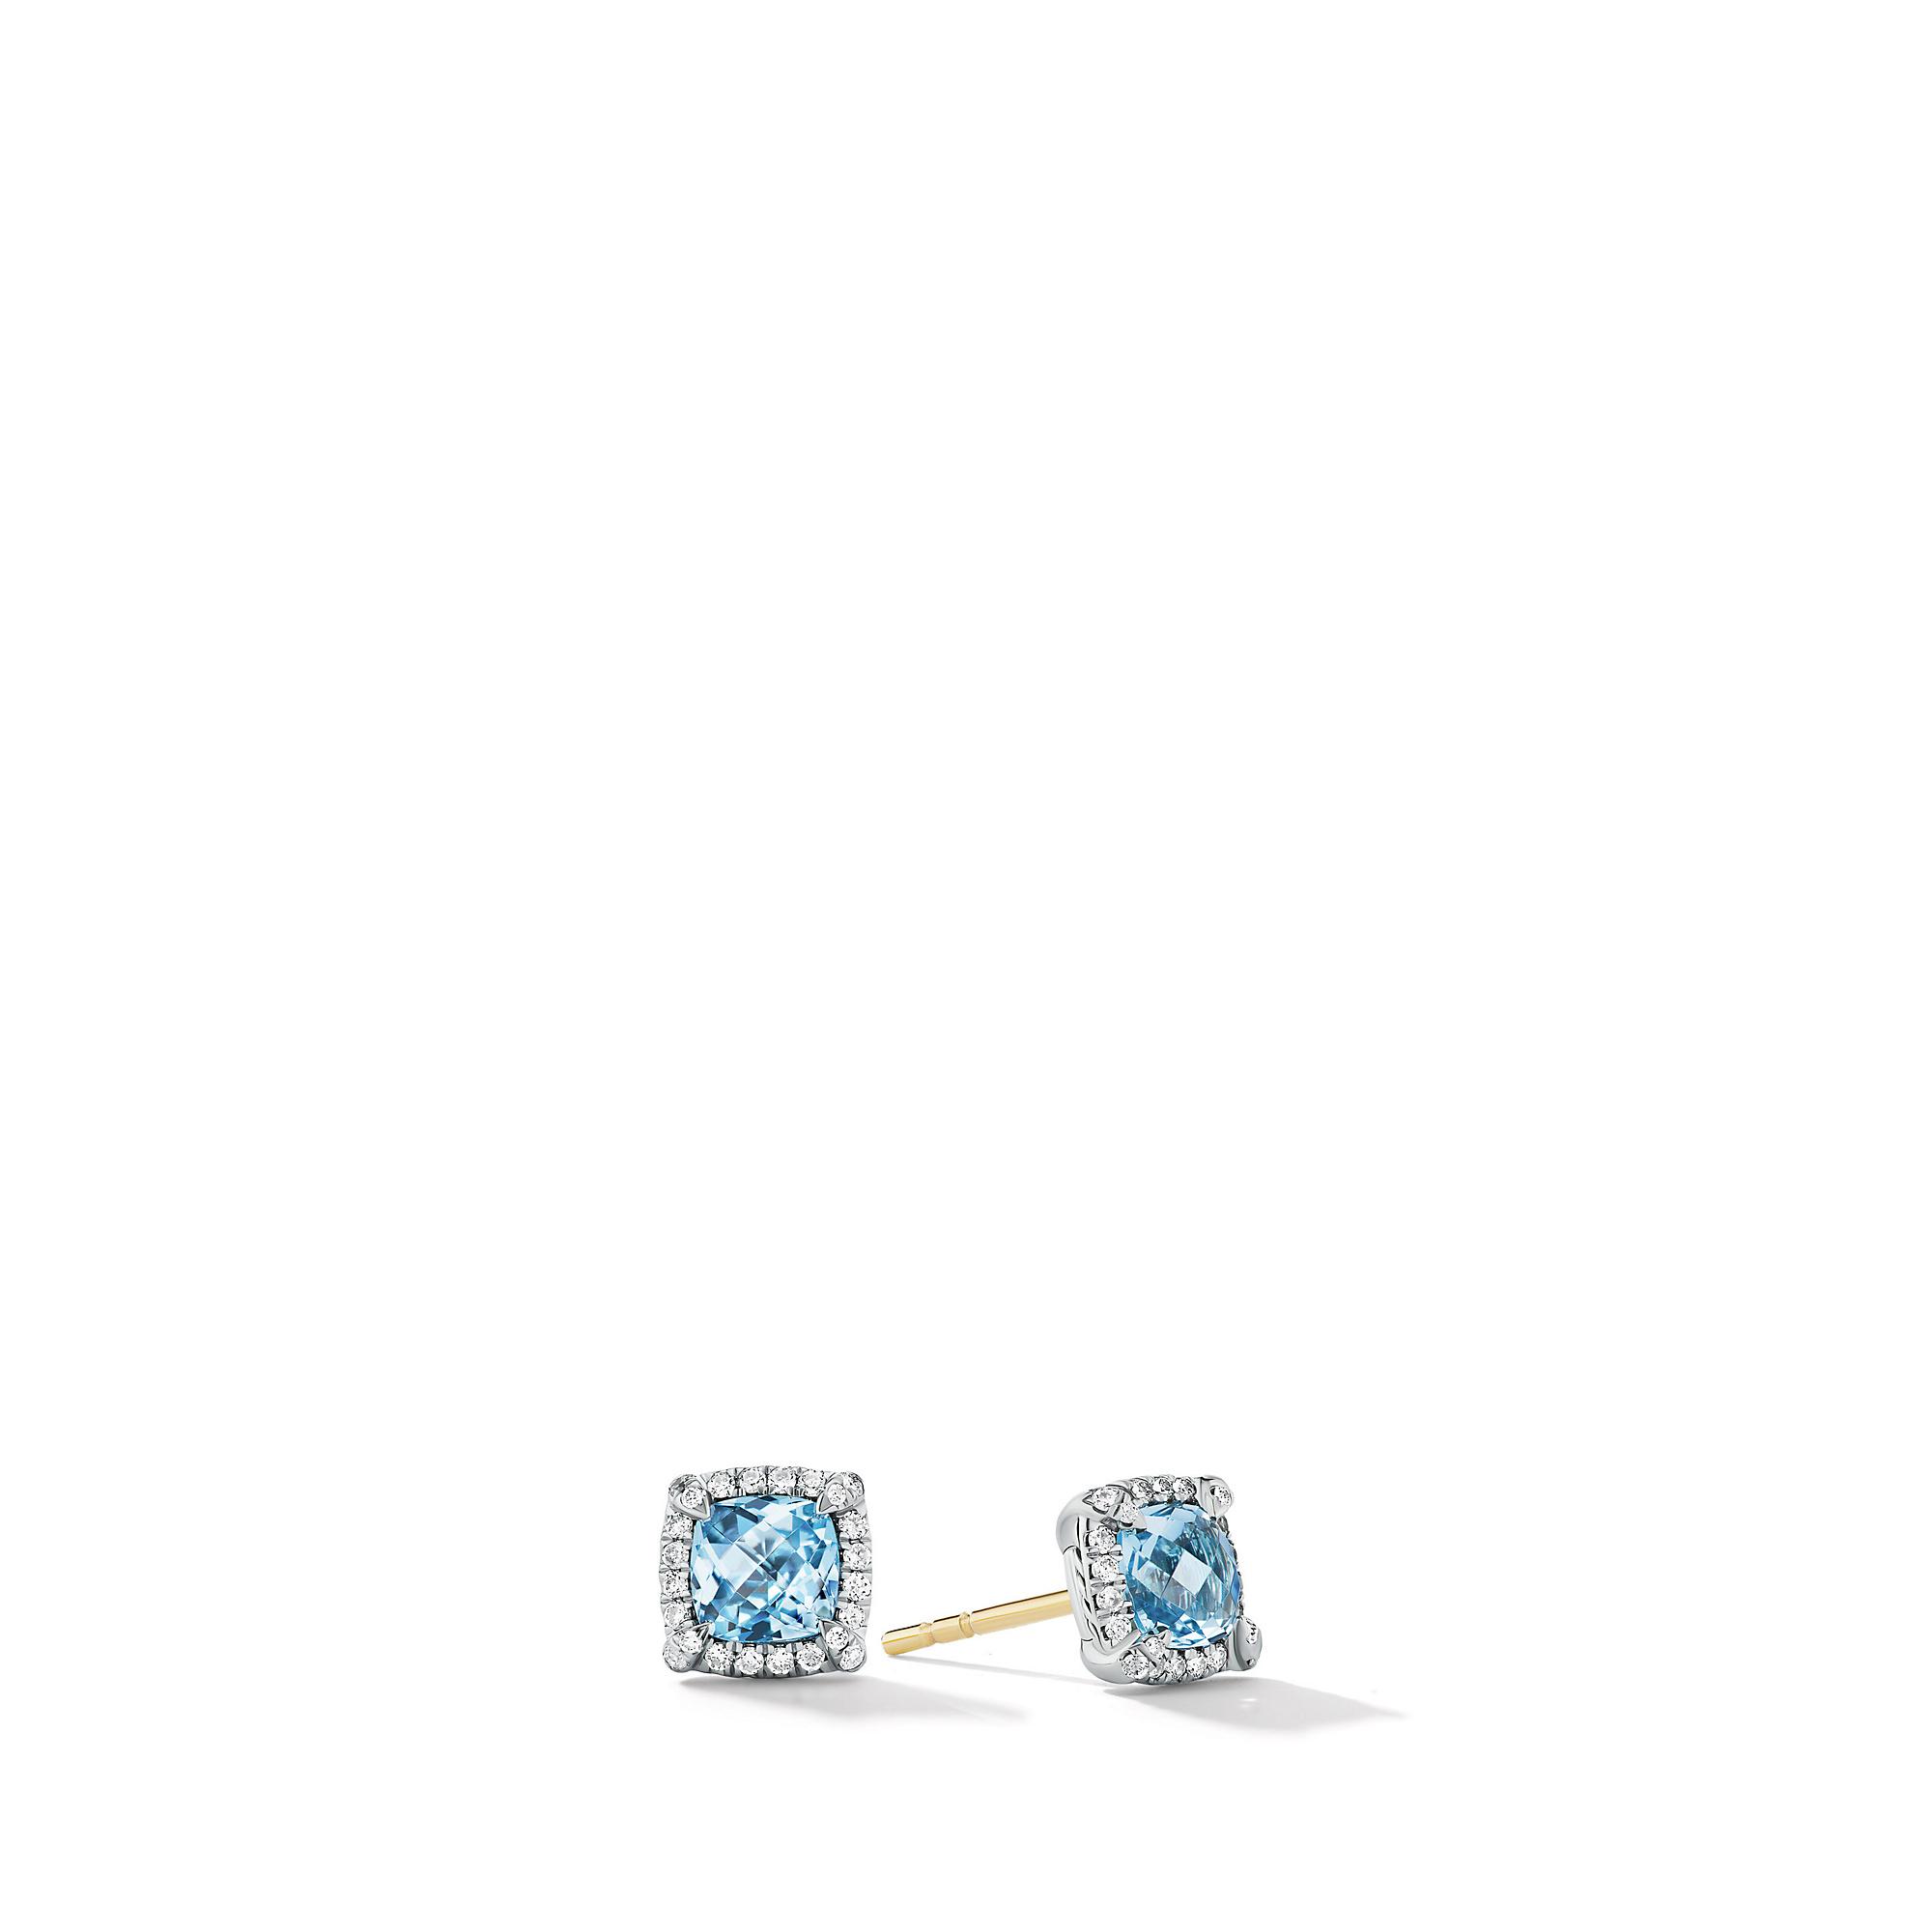 David Yurman Petite Chatelaine Pave Bezel Stud Earrings with Blue Topaz and Diamonds